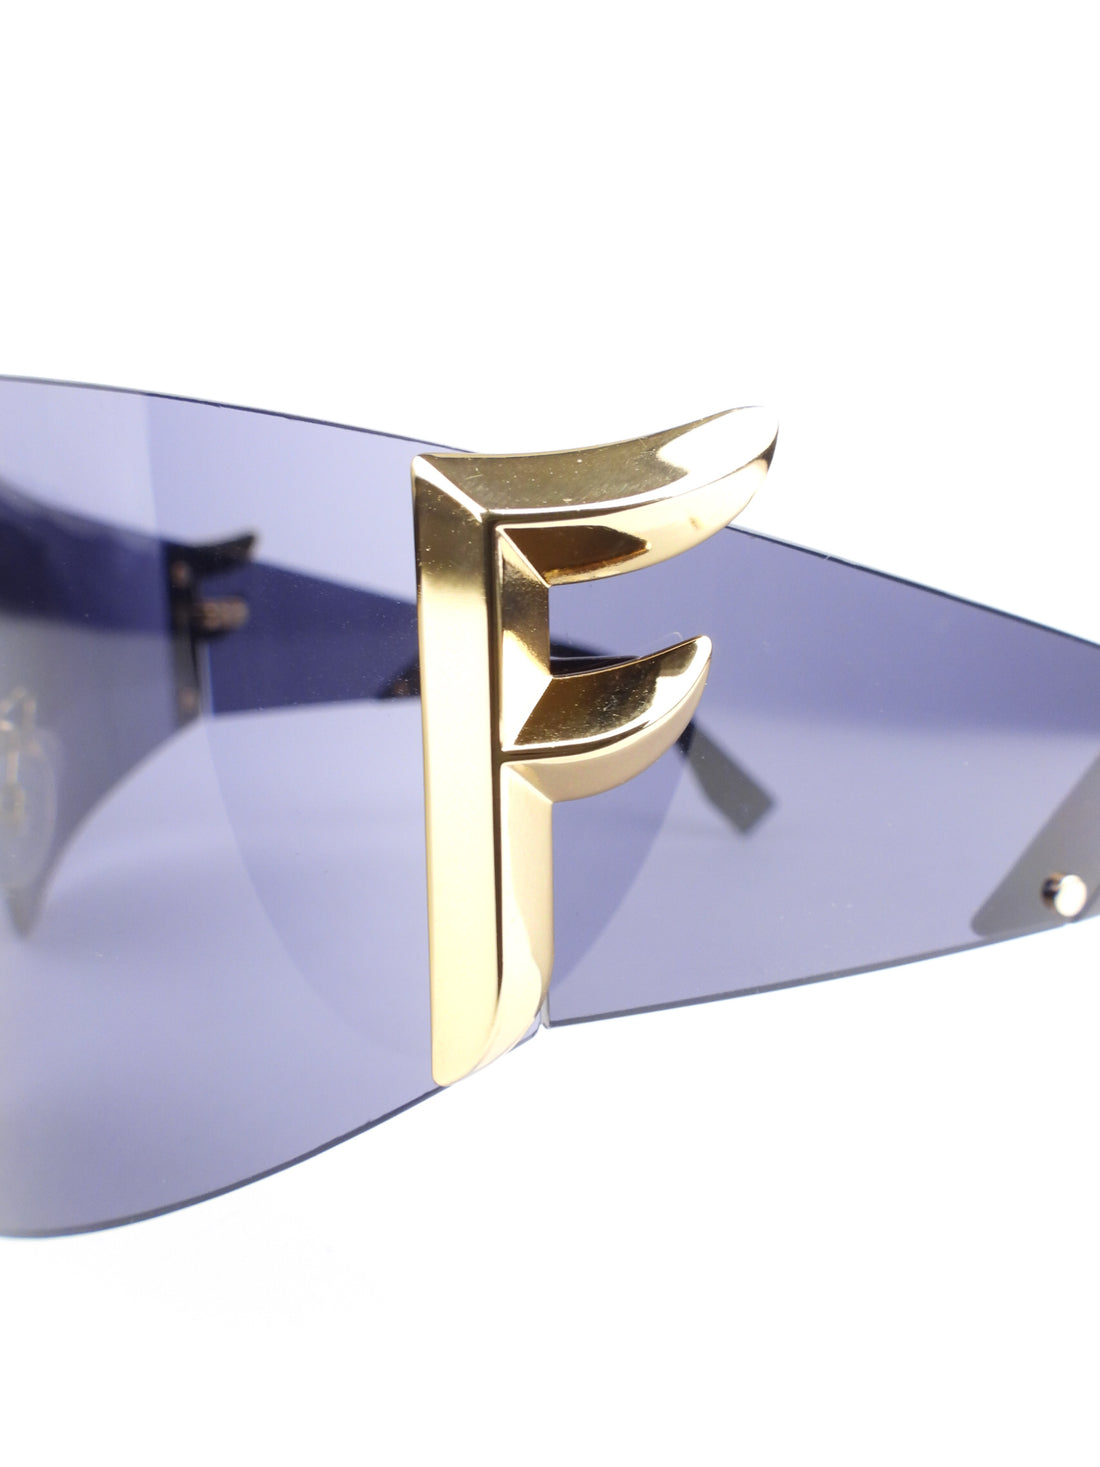 Fendi Grey and Black Oversized Shield Sunglasses FF0382/S